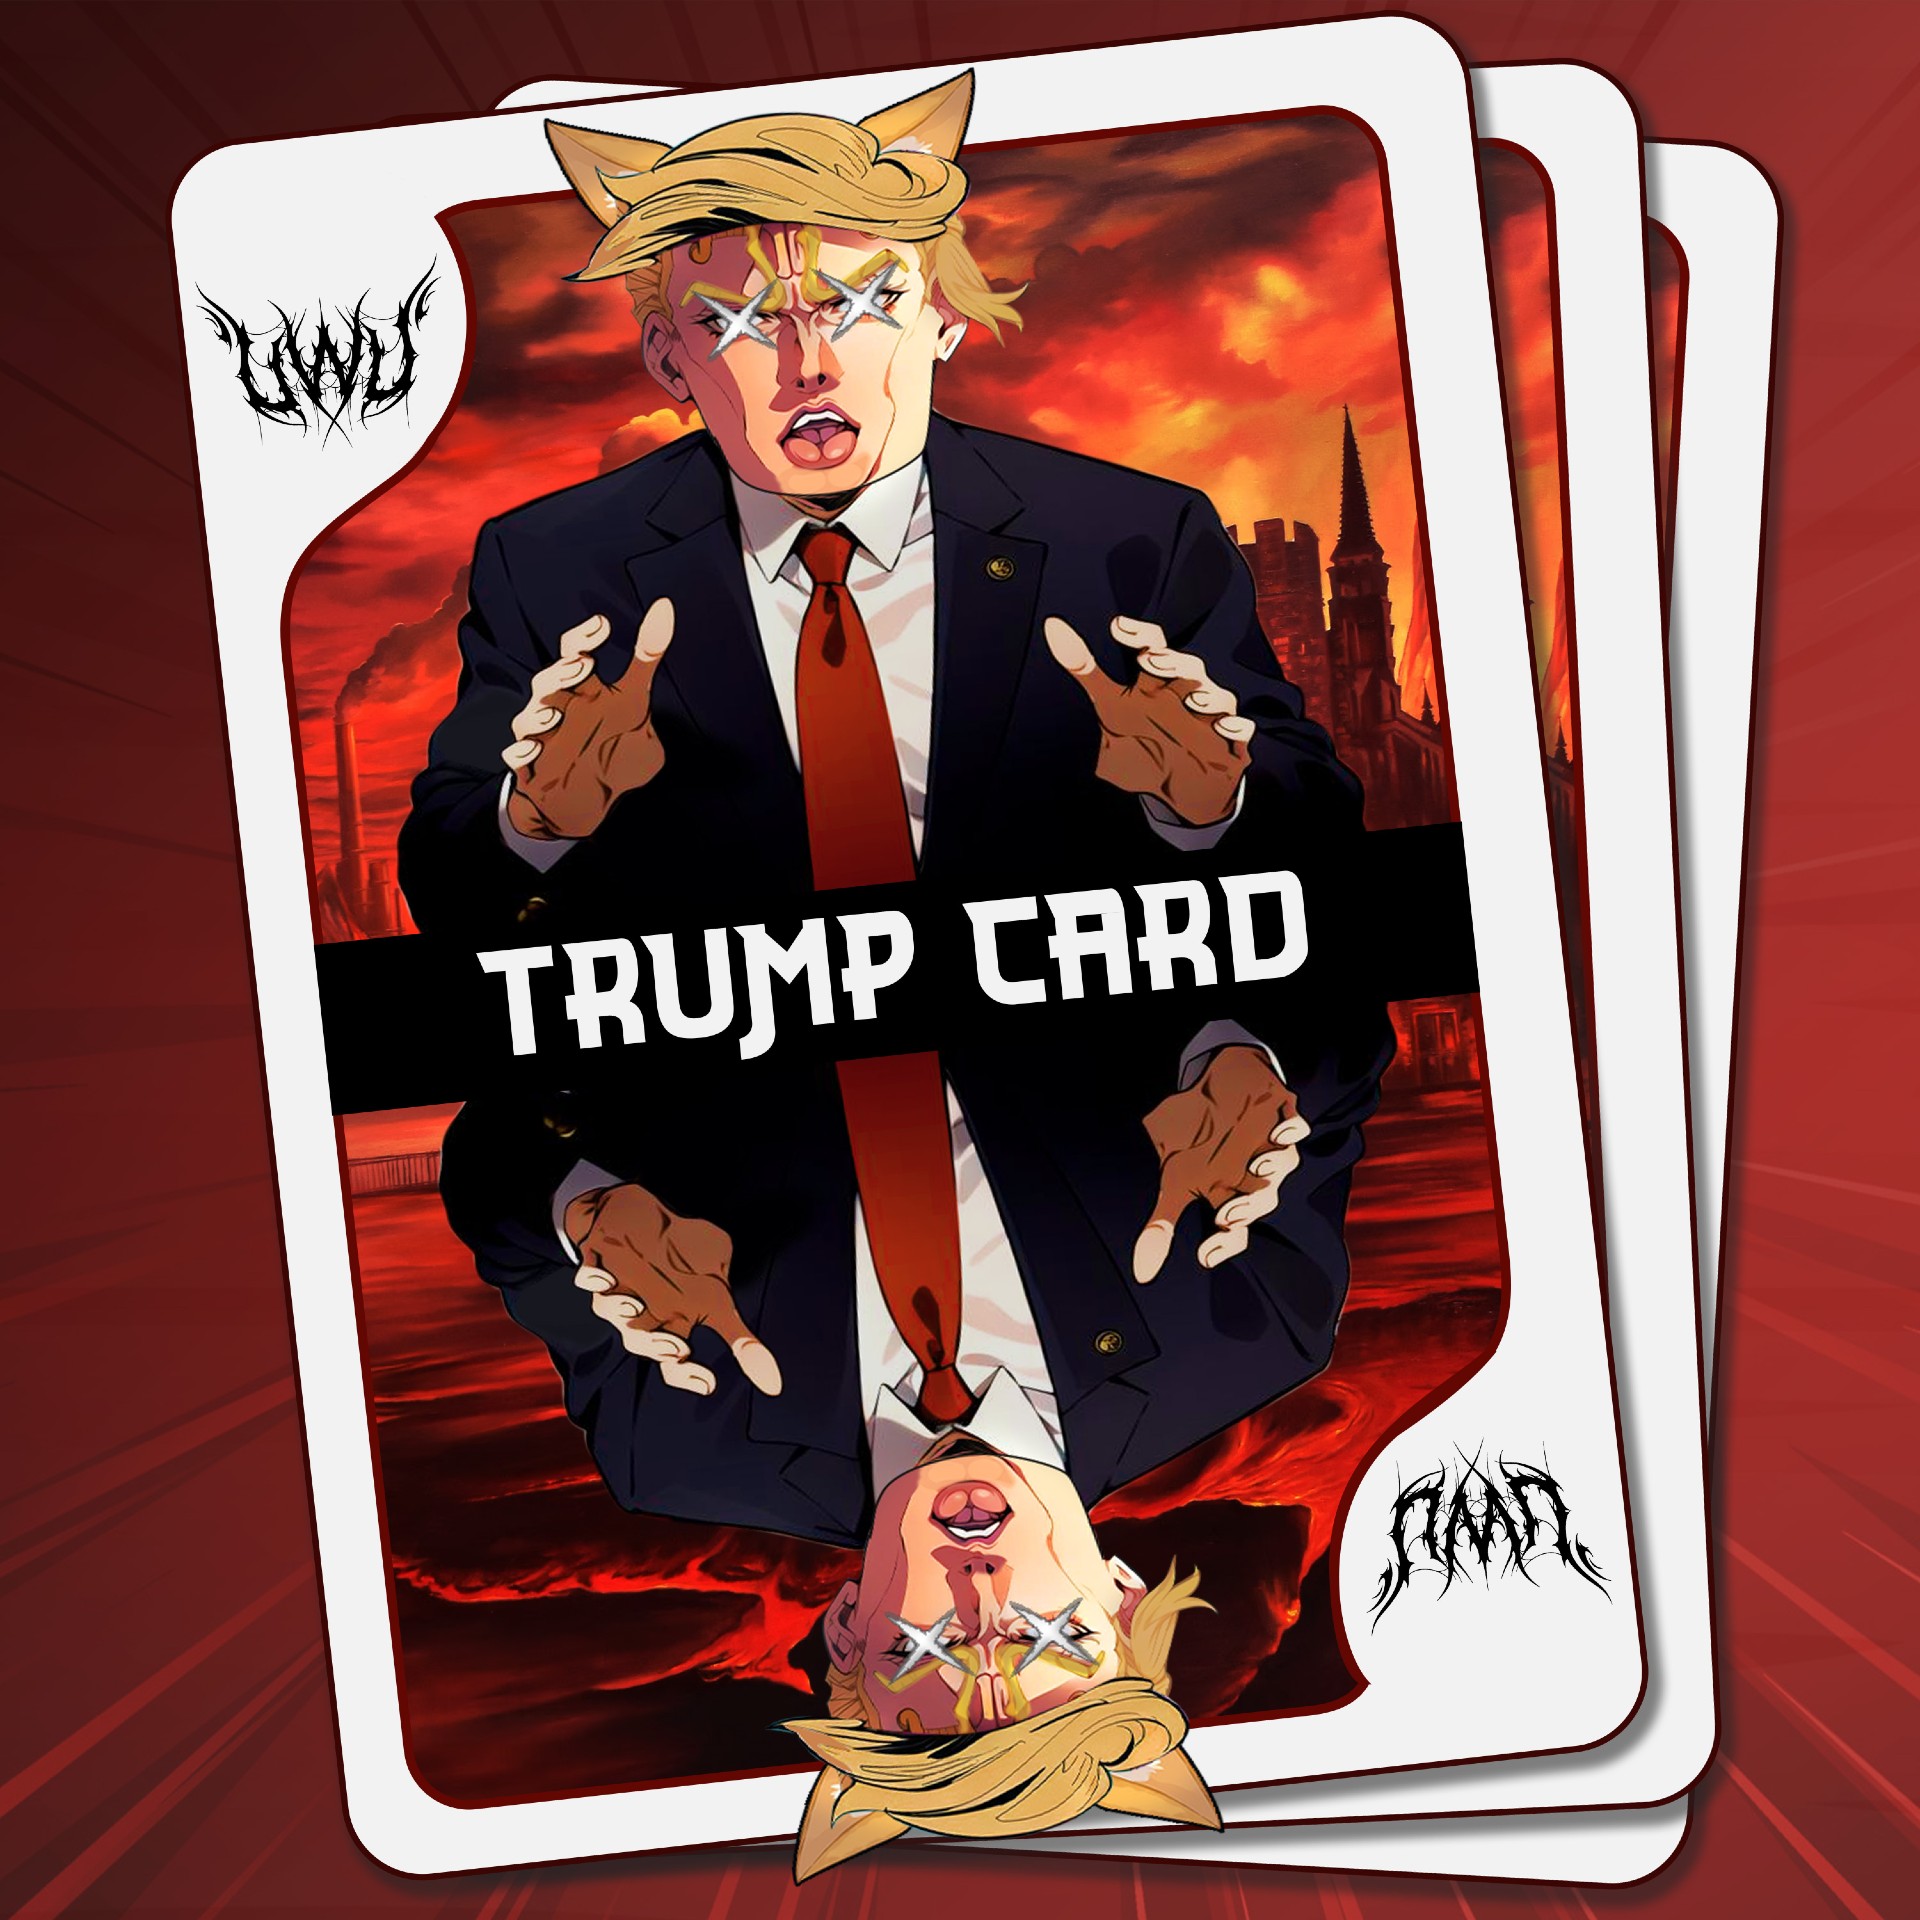 Unhealthy While Unhinged “Trump Card” single artwork